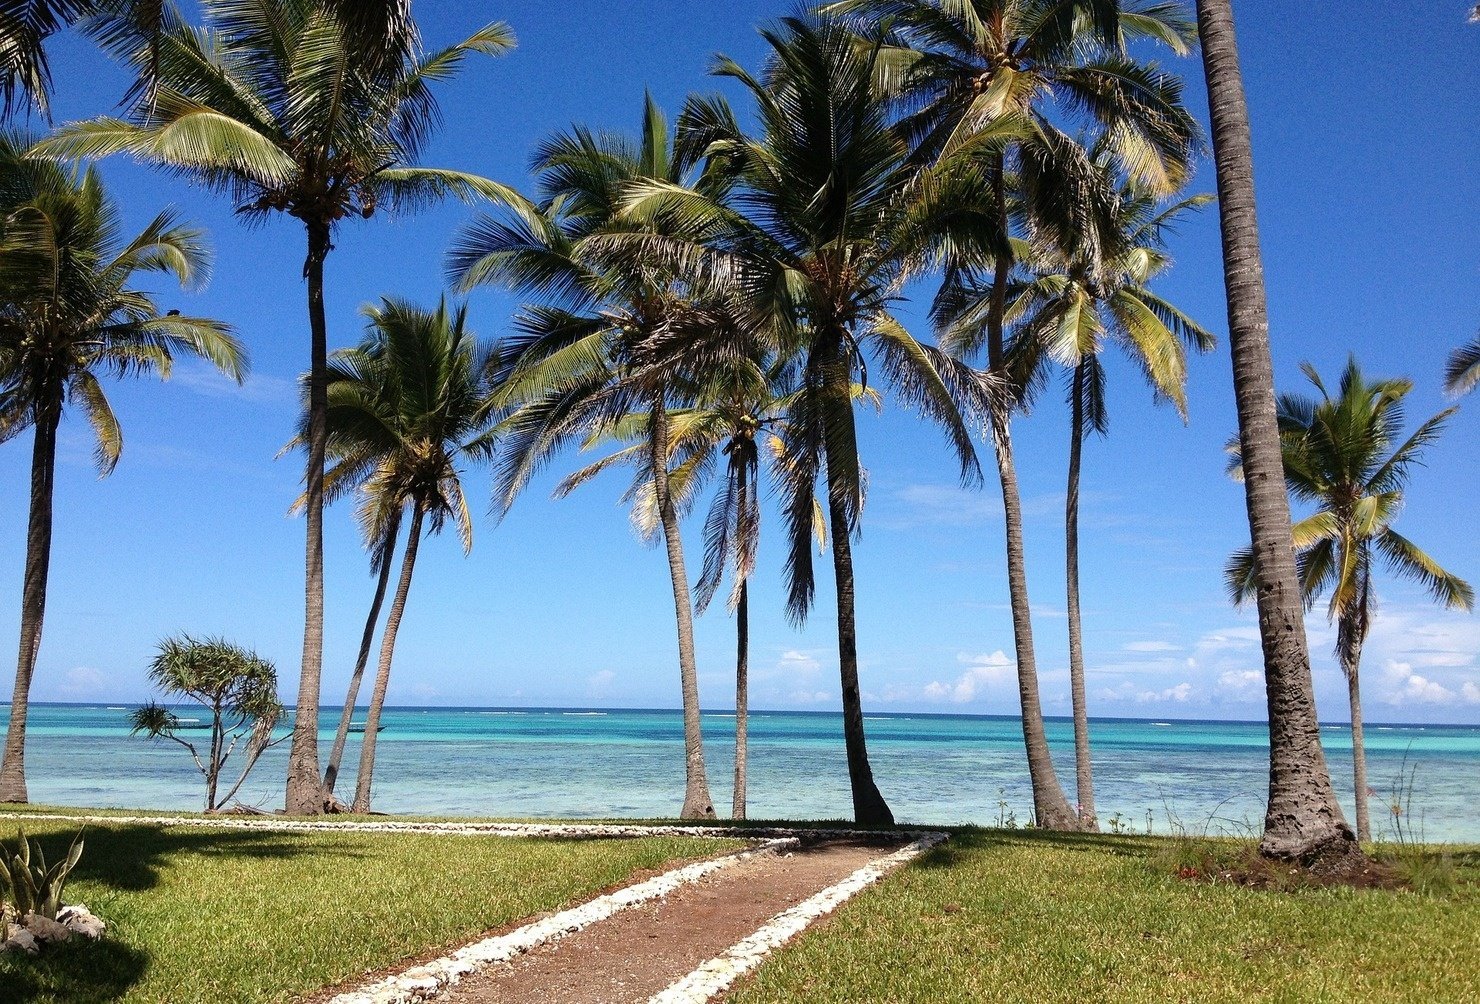 Hidden Beaches: Maldives or Zanzibar? | Audley Travel